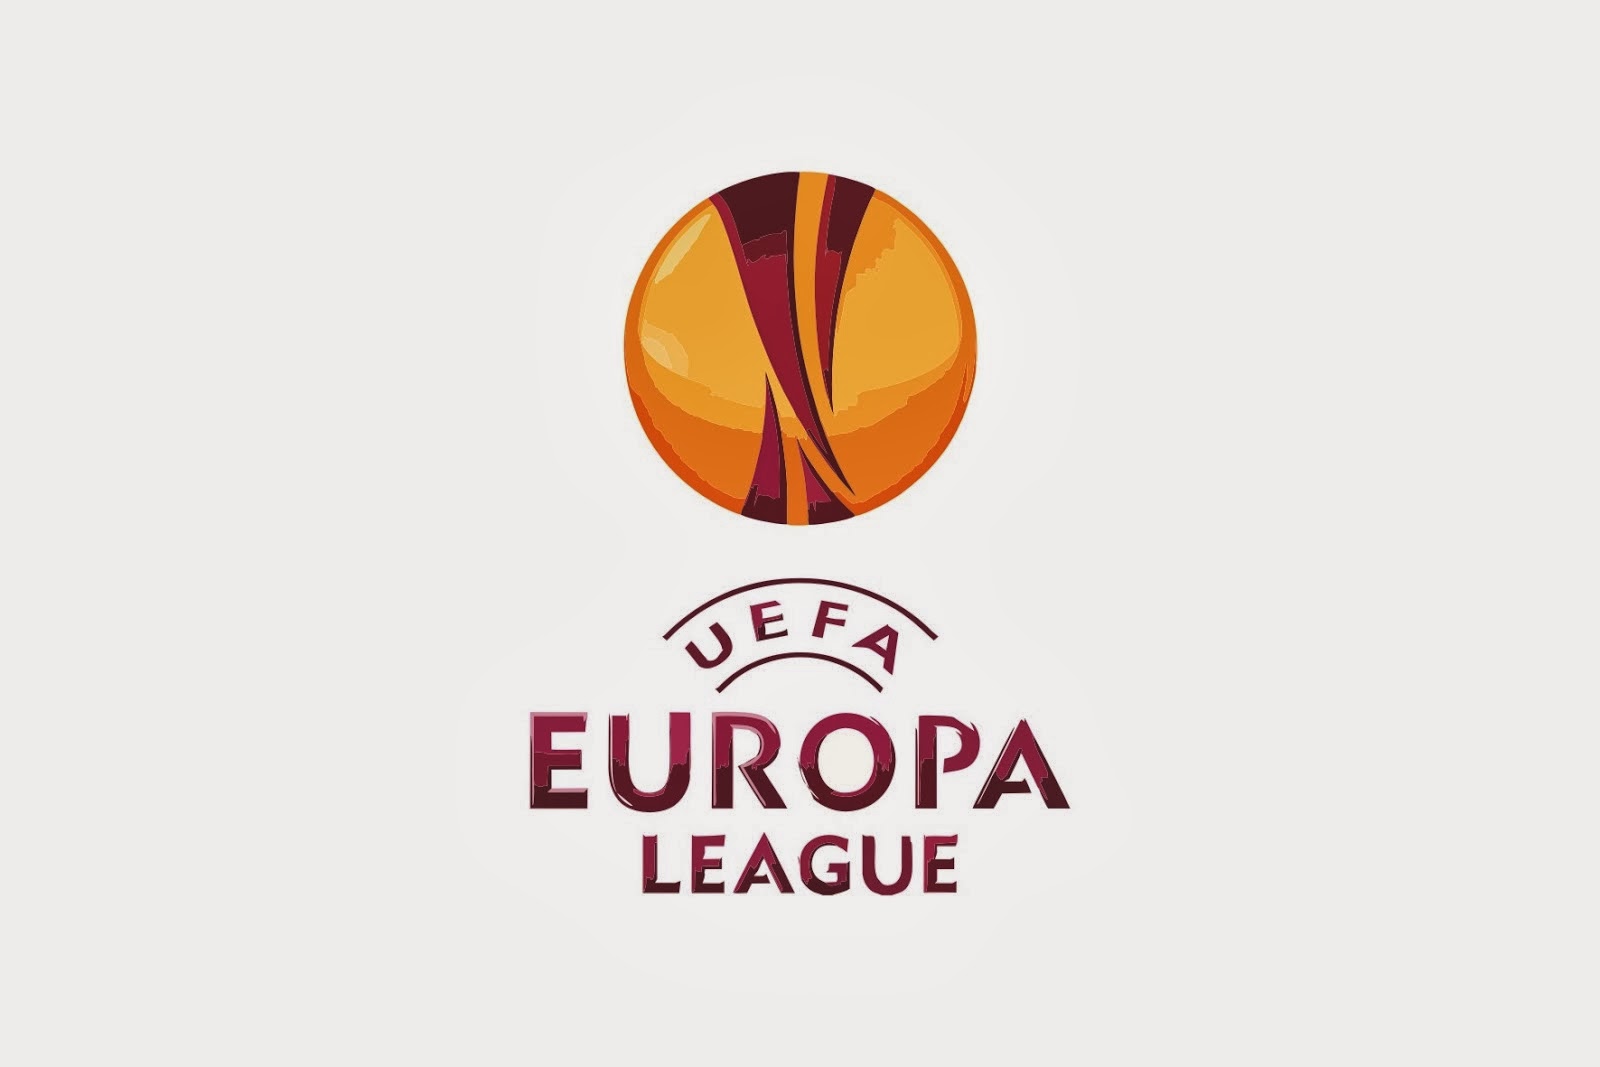 Jadwal Liga UEFA Europa League 2013-2014 | Bursa Prediksi